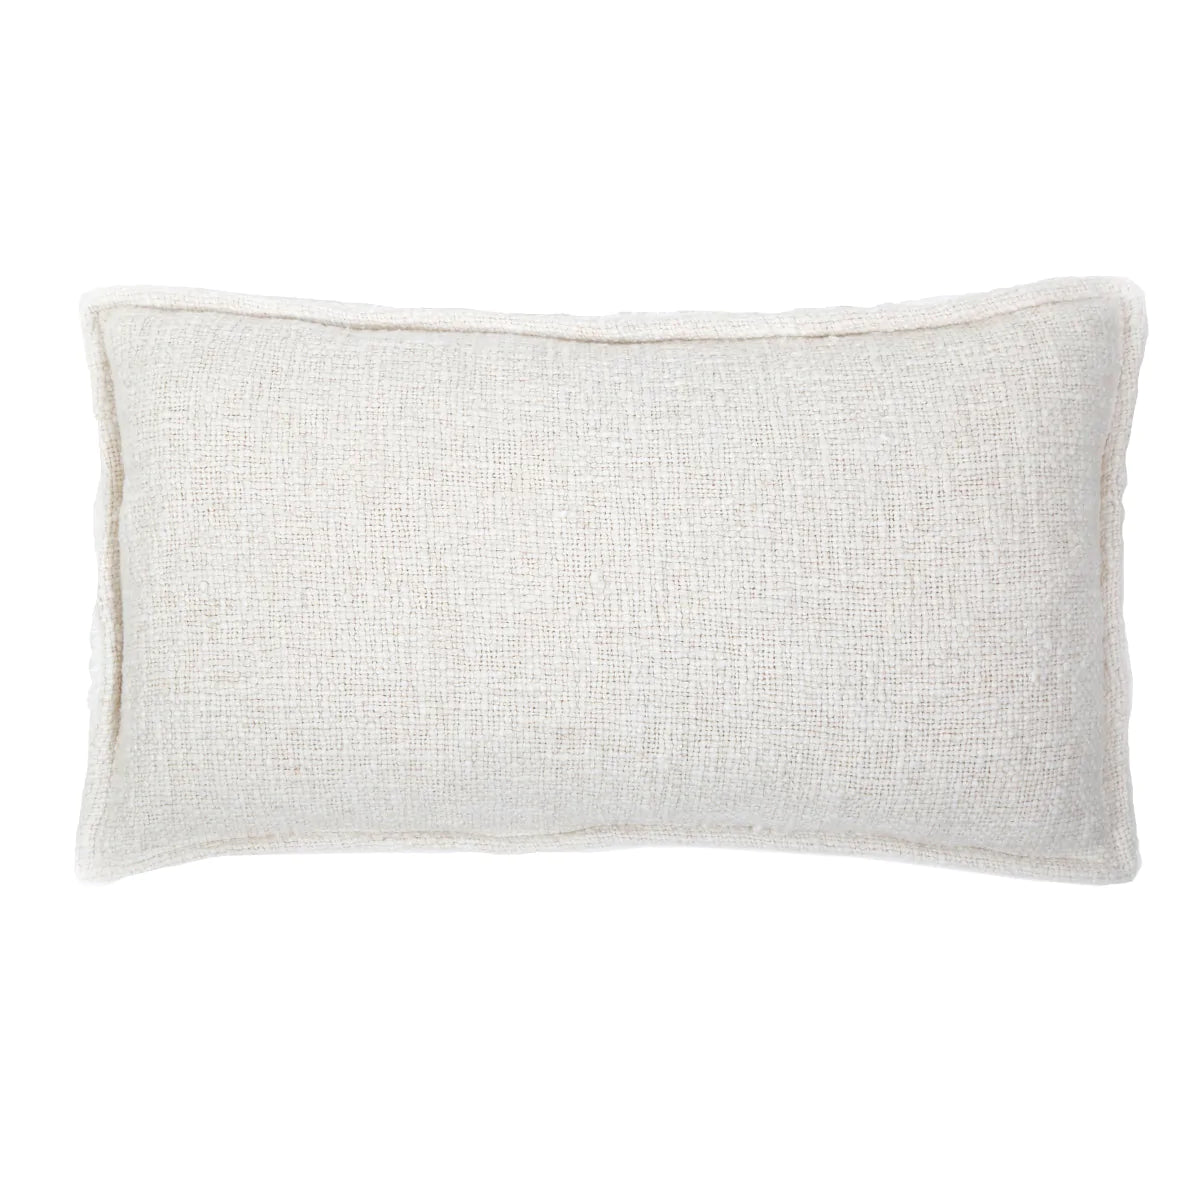 Humboldt Handwoven Rectangular Pillow, Cream